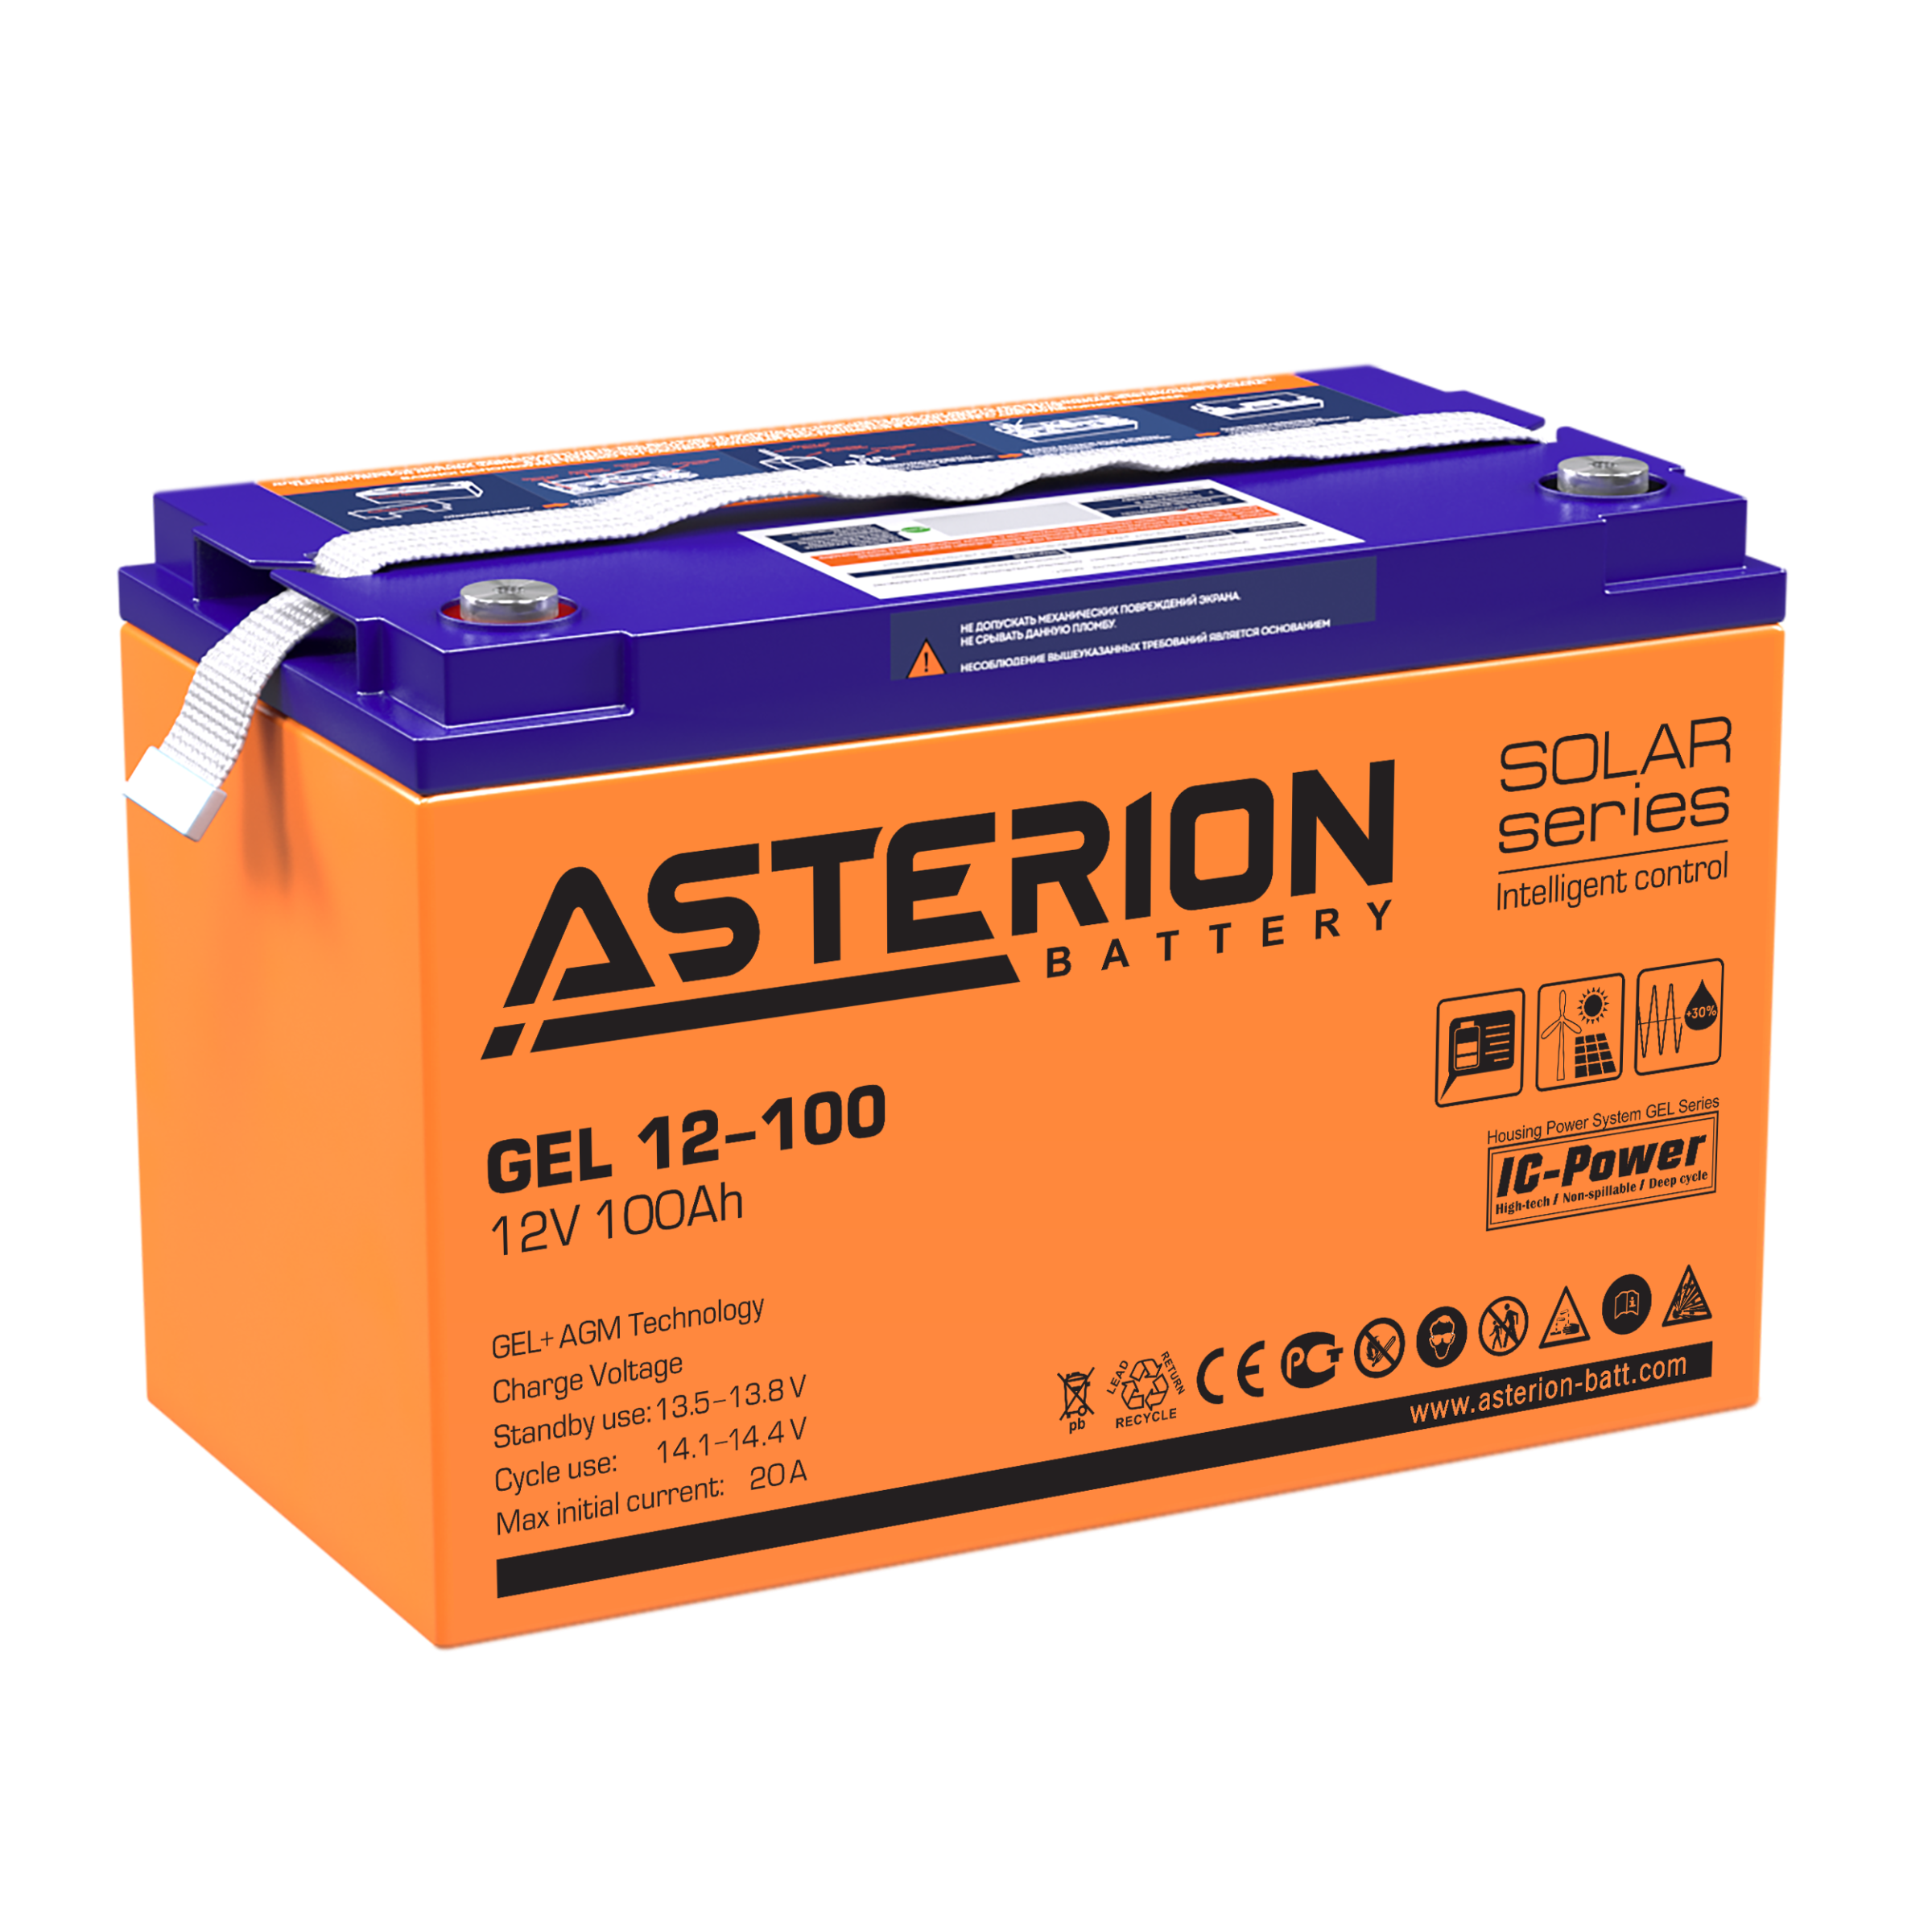 Asterion GEL 12-100 12V/100AH AGM+GEL Battery